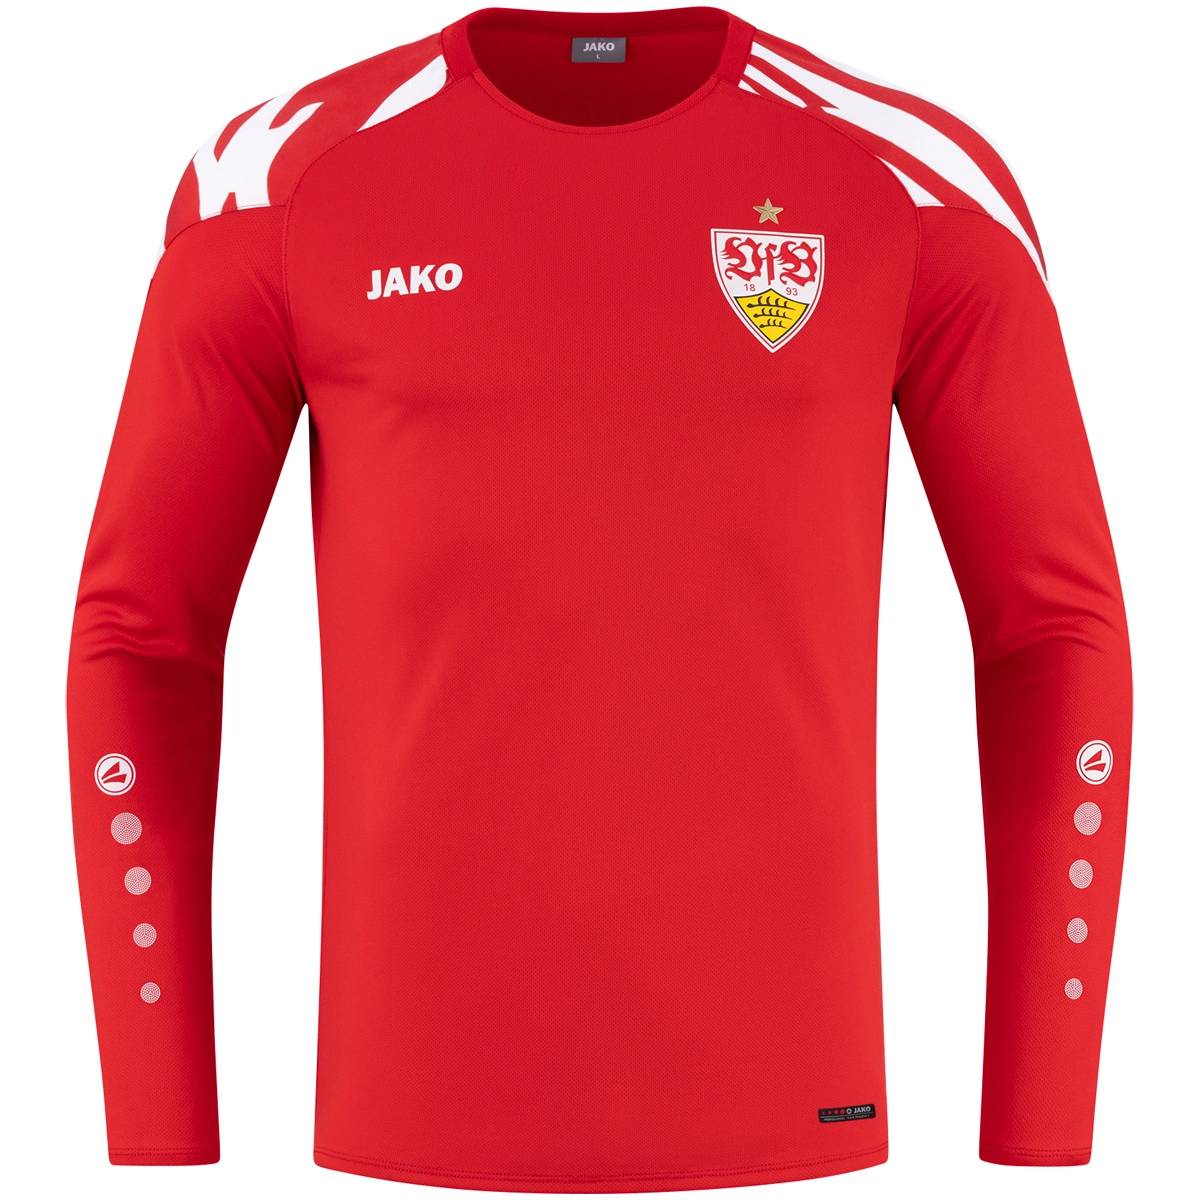 JAKO VfB_Sweat_Wild ST8823WK 105 rot/weiß